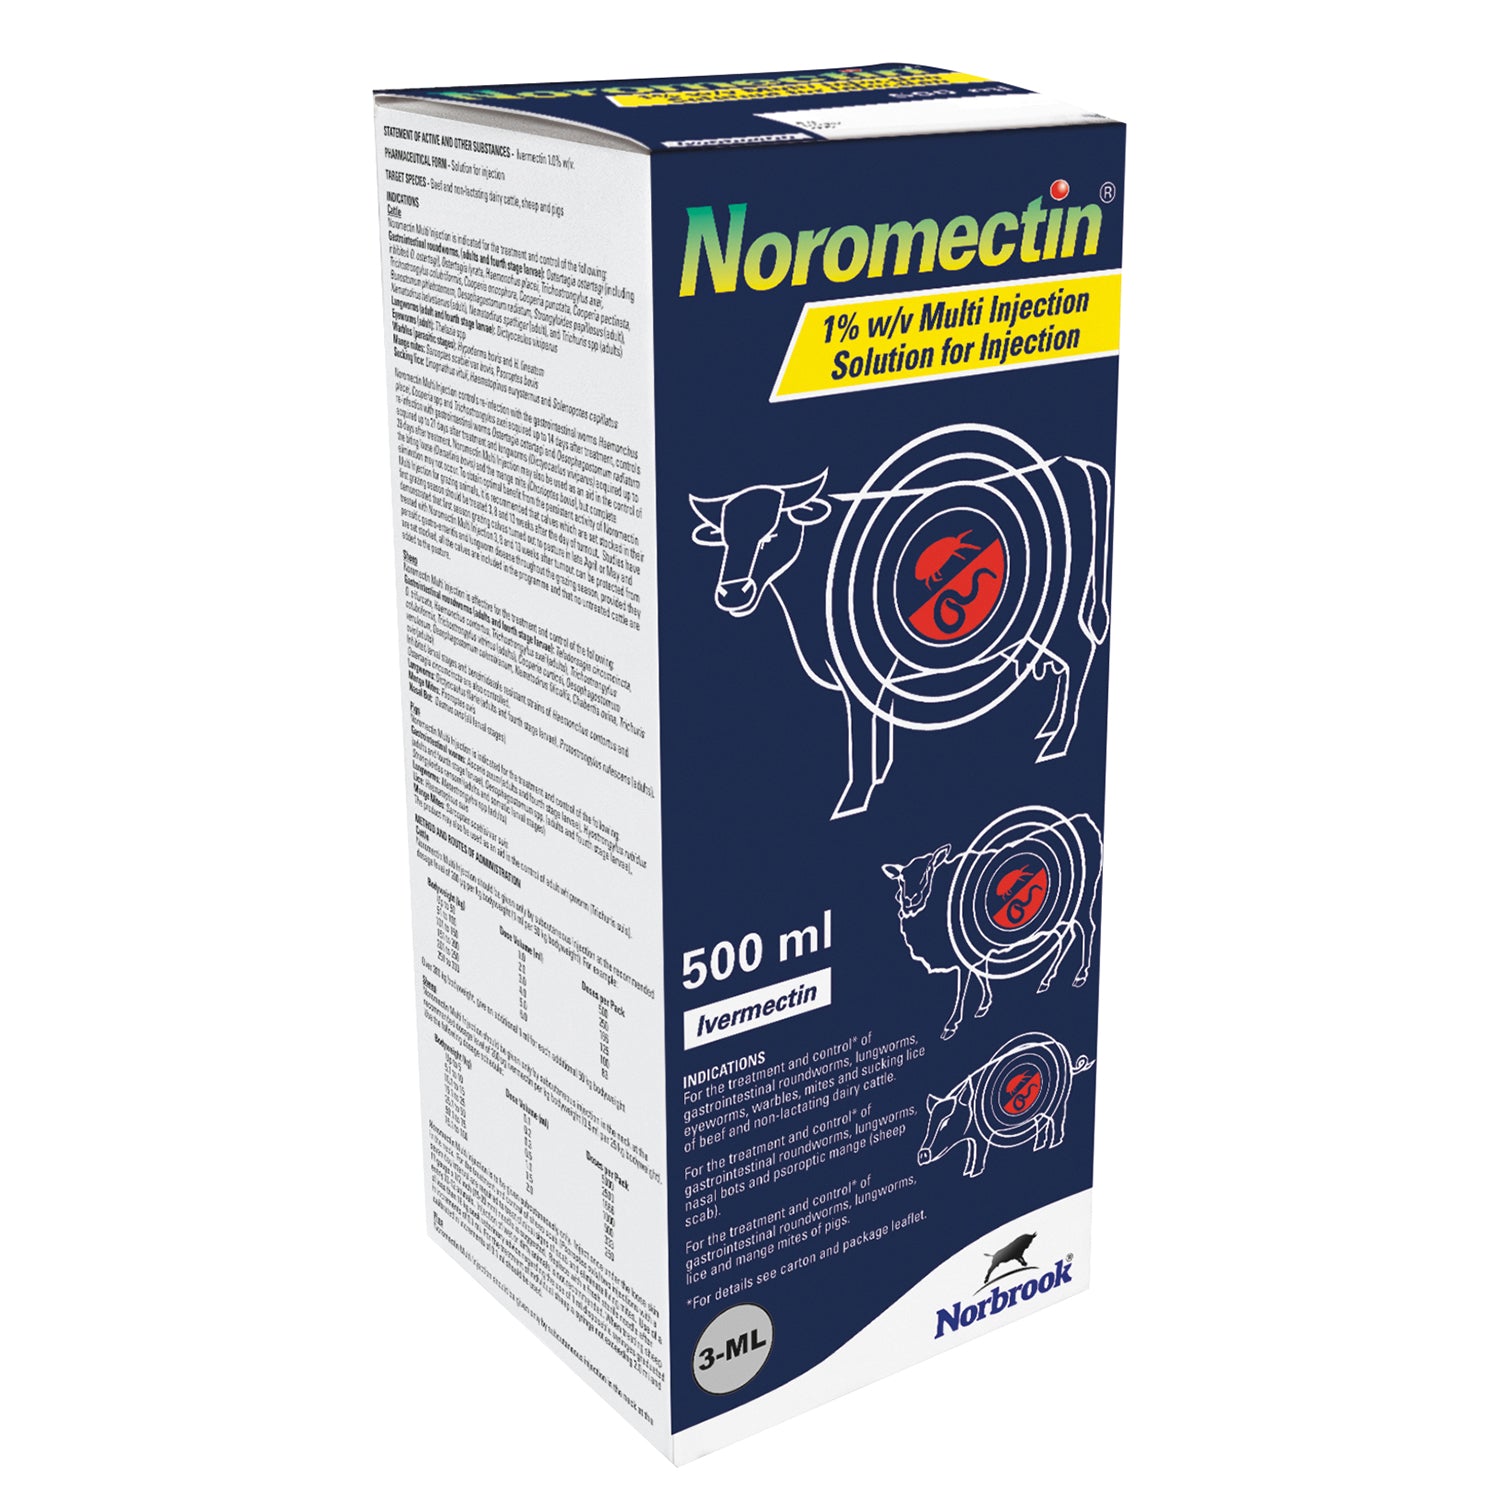 Norbrook Noromectin Multi Injection